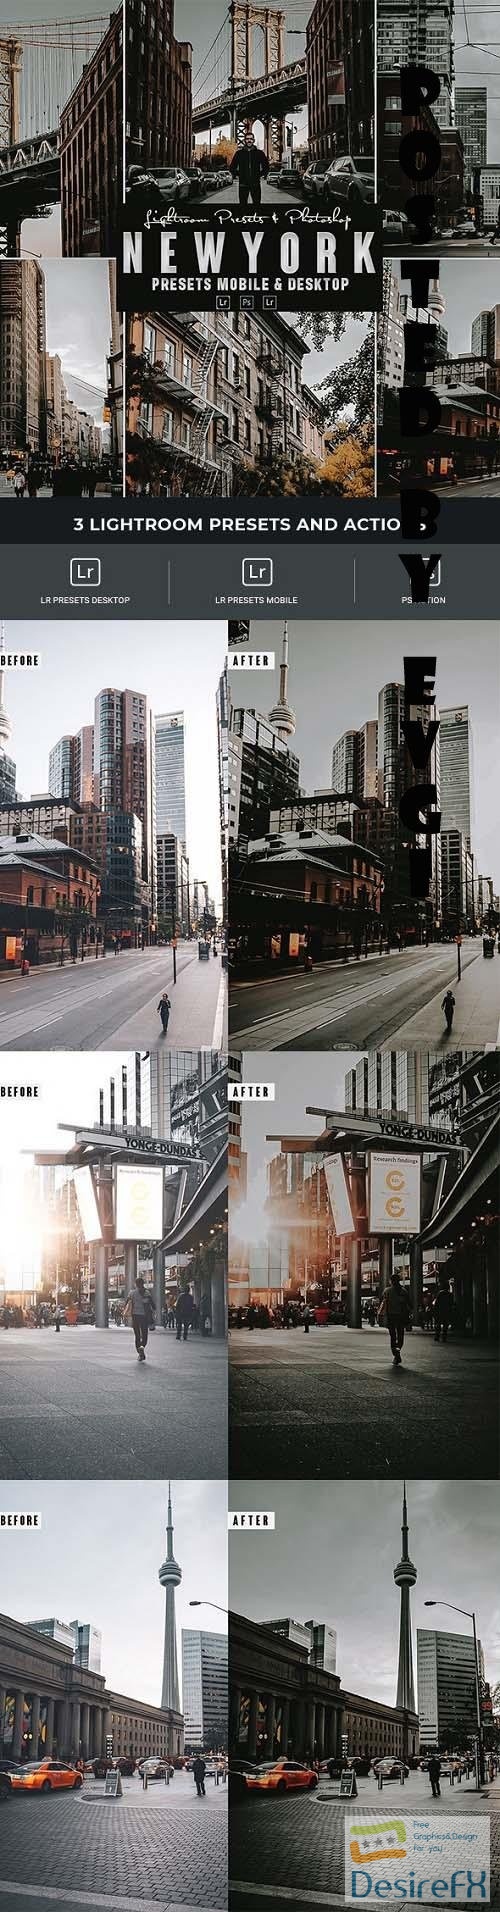 Newyork Photoshop Action &amp; Lightrom Presets - 34508497